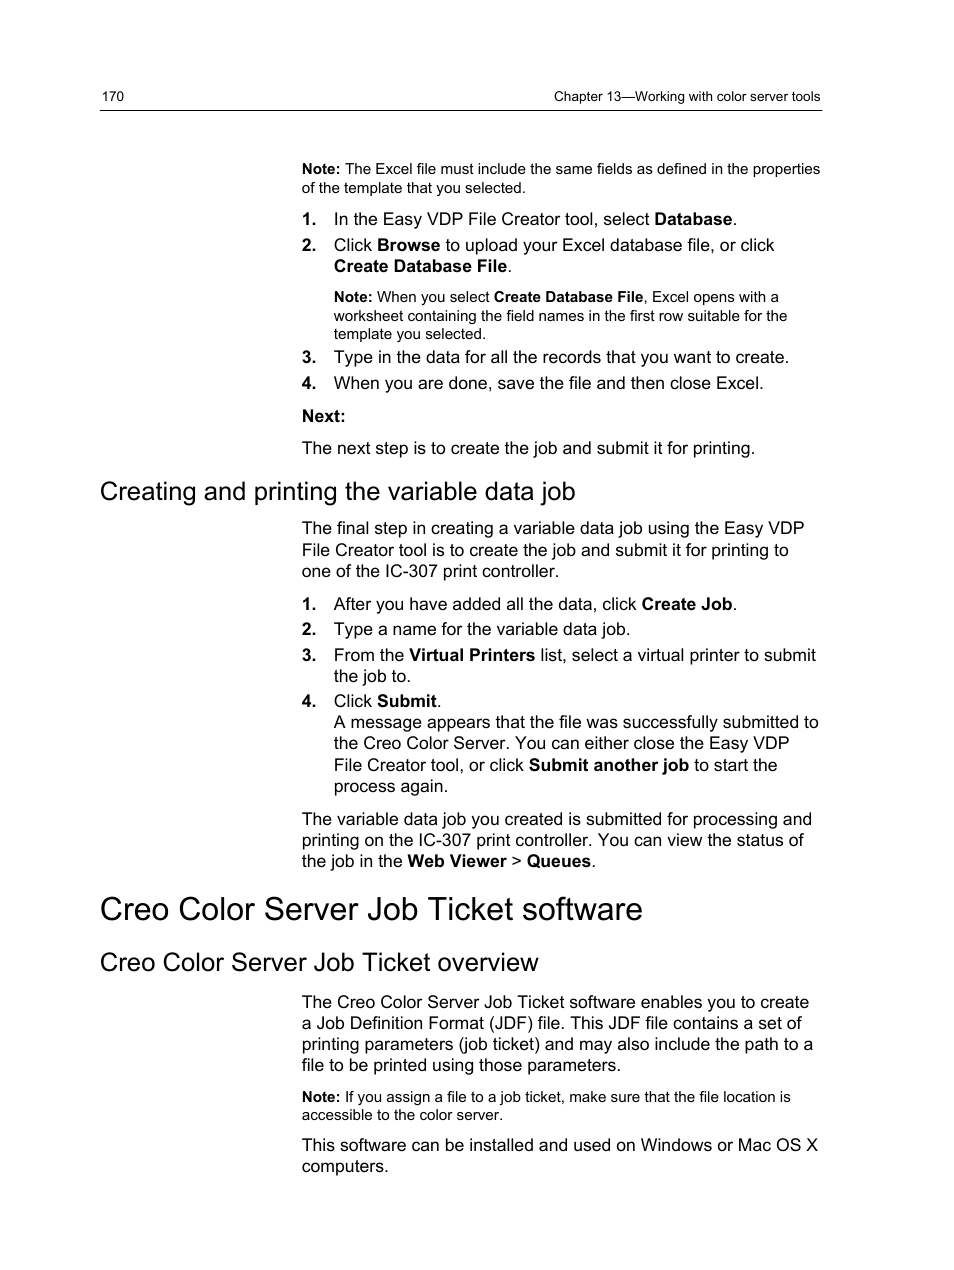 Creating and printing the variable data job, Creo color server job ticket software, Creo color server job ticket overview | Konica Minolta bizhub PRESS C7000 User Manual | Page 180 / 218